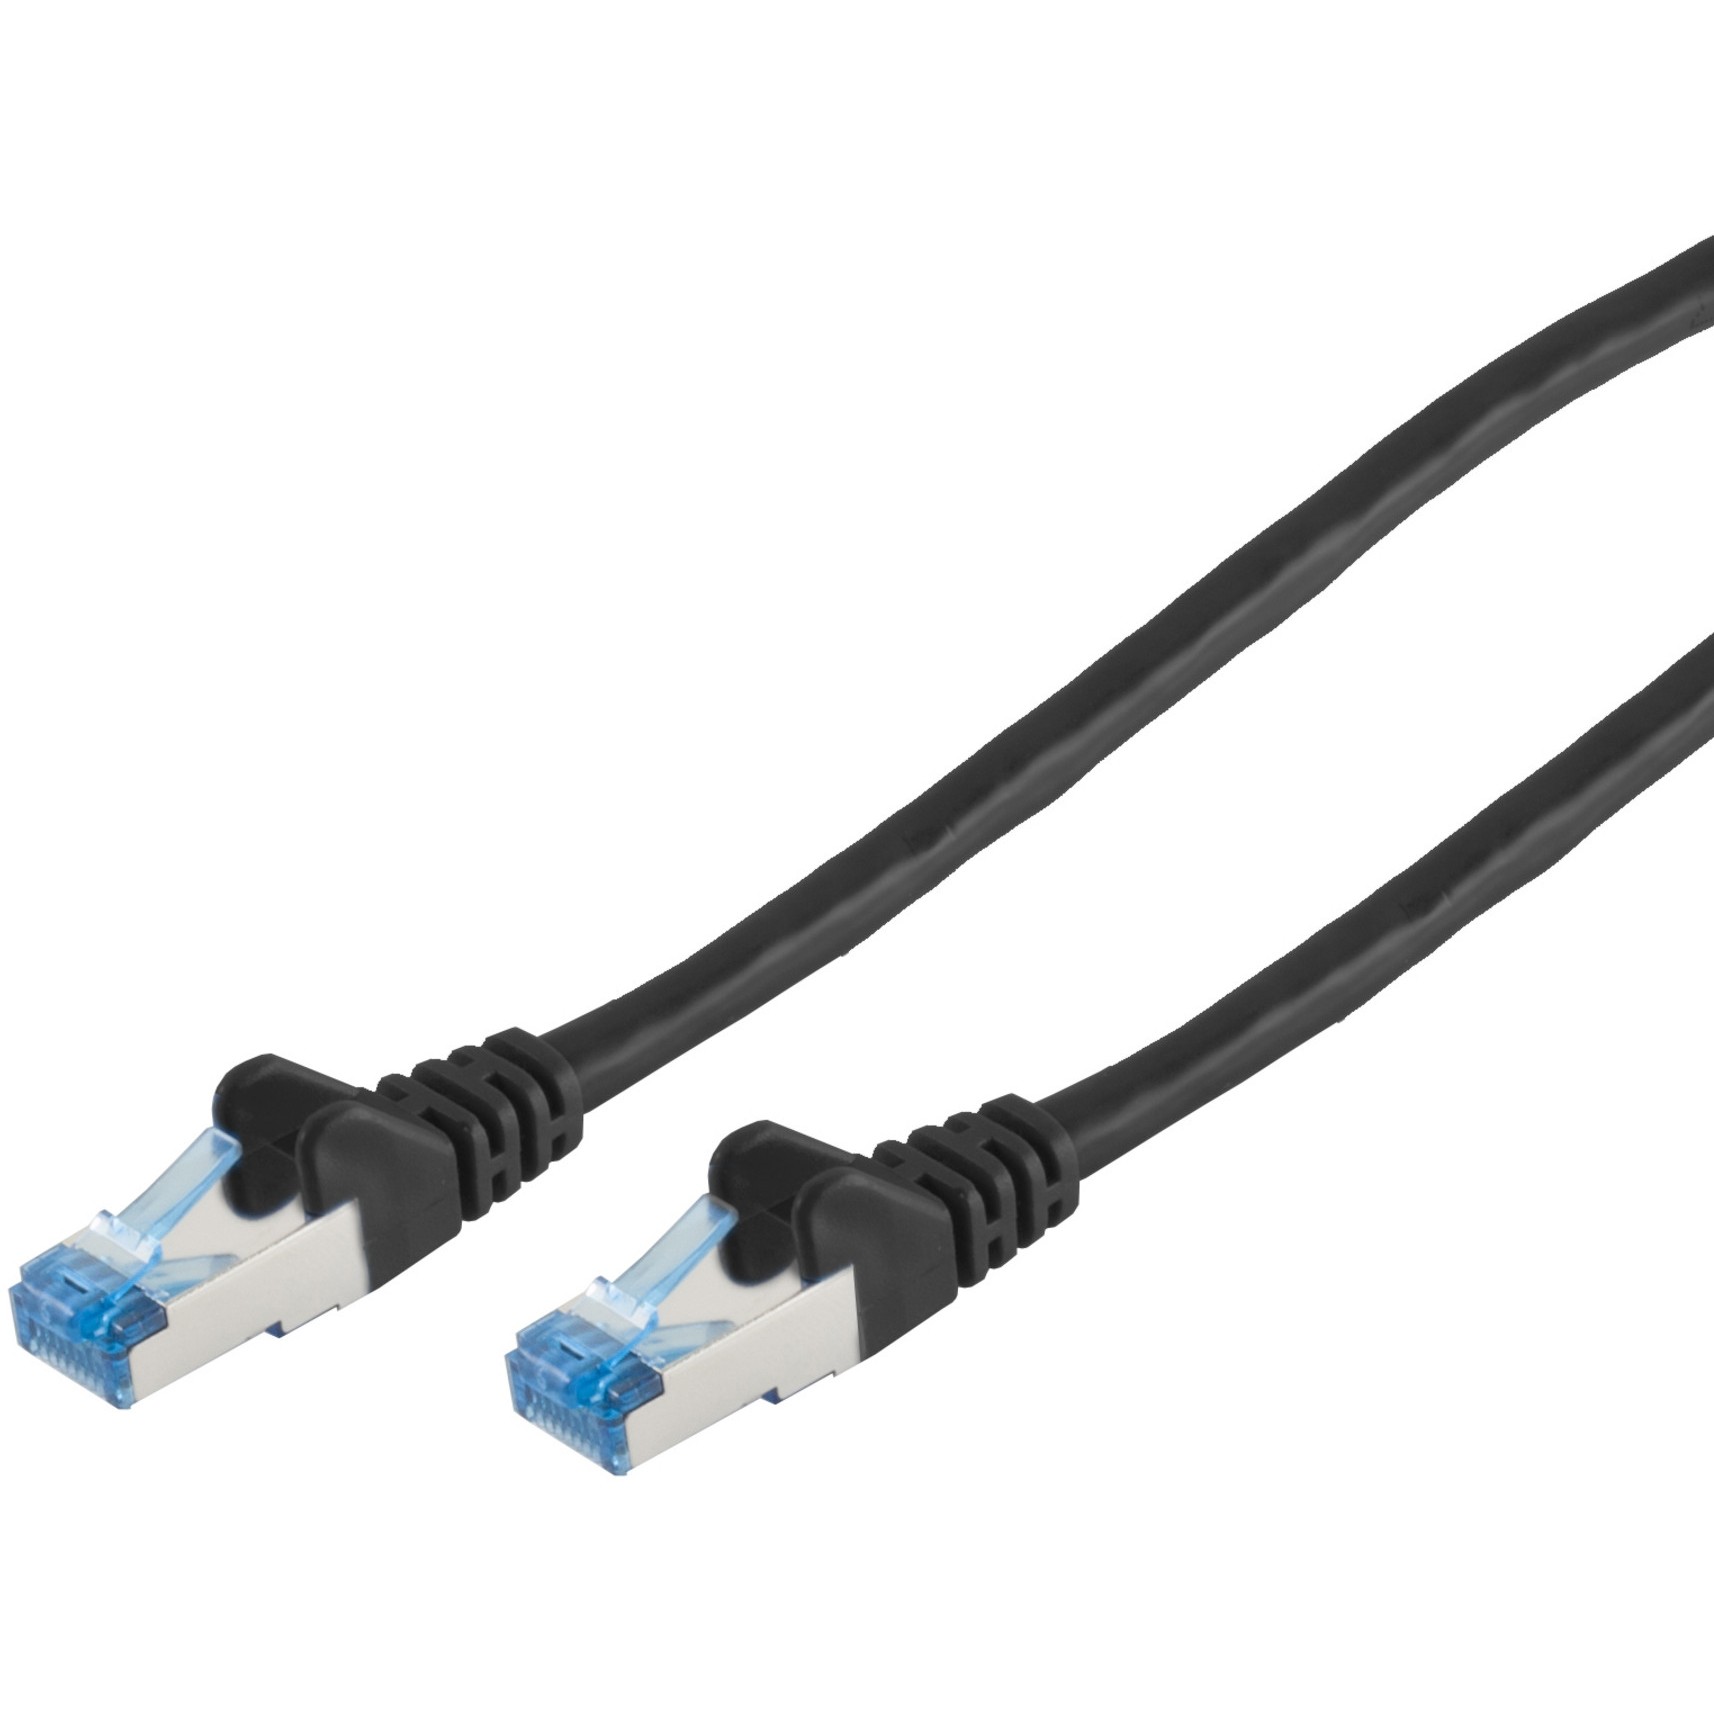 No-Name 75711-0.5S, Netzwerk Cat-Kabel, S-Conn cable  (BILD1)